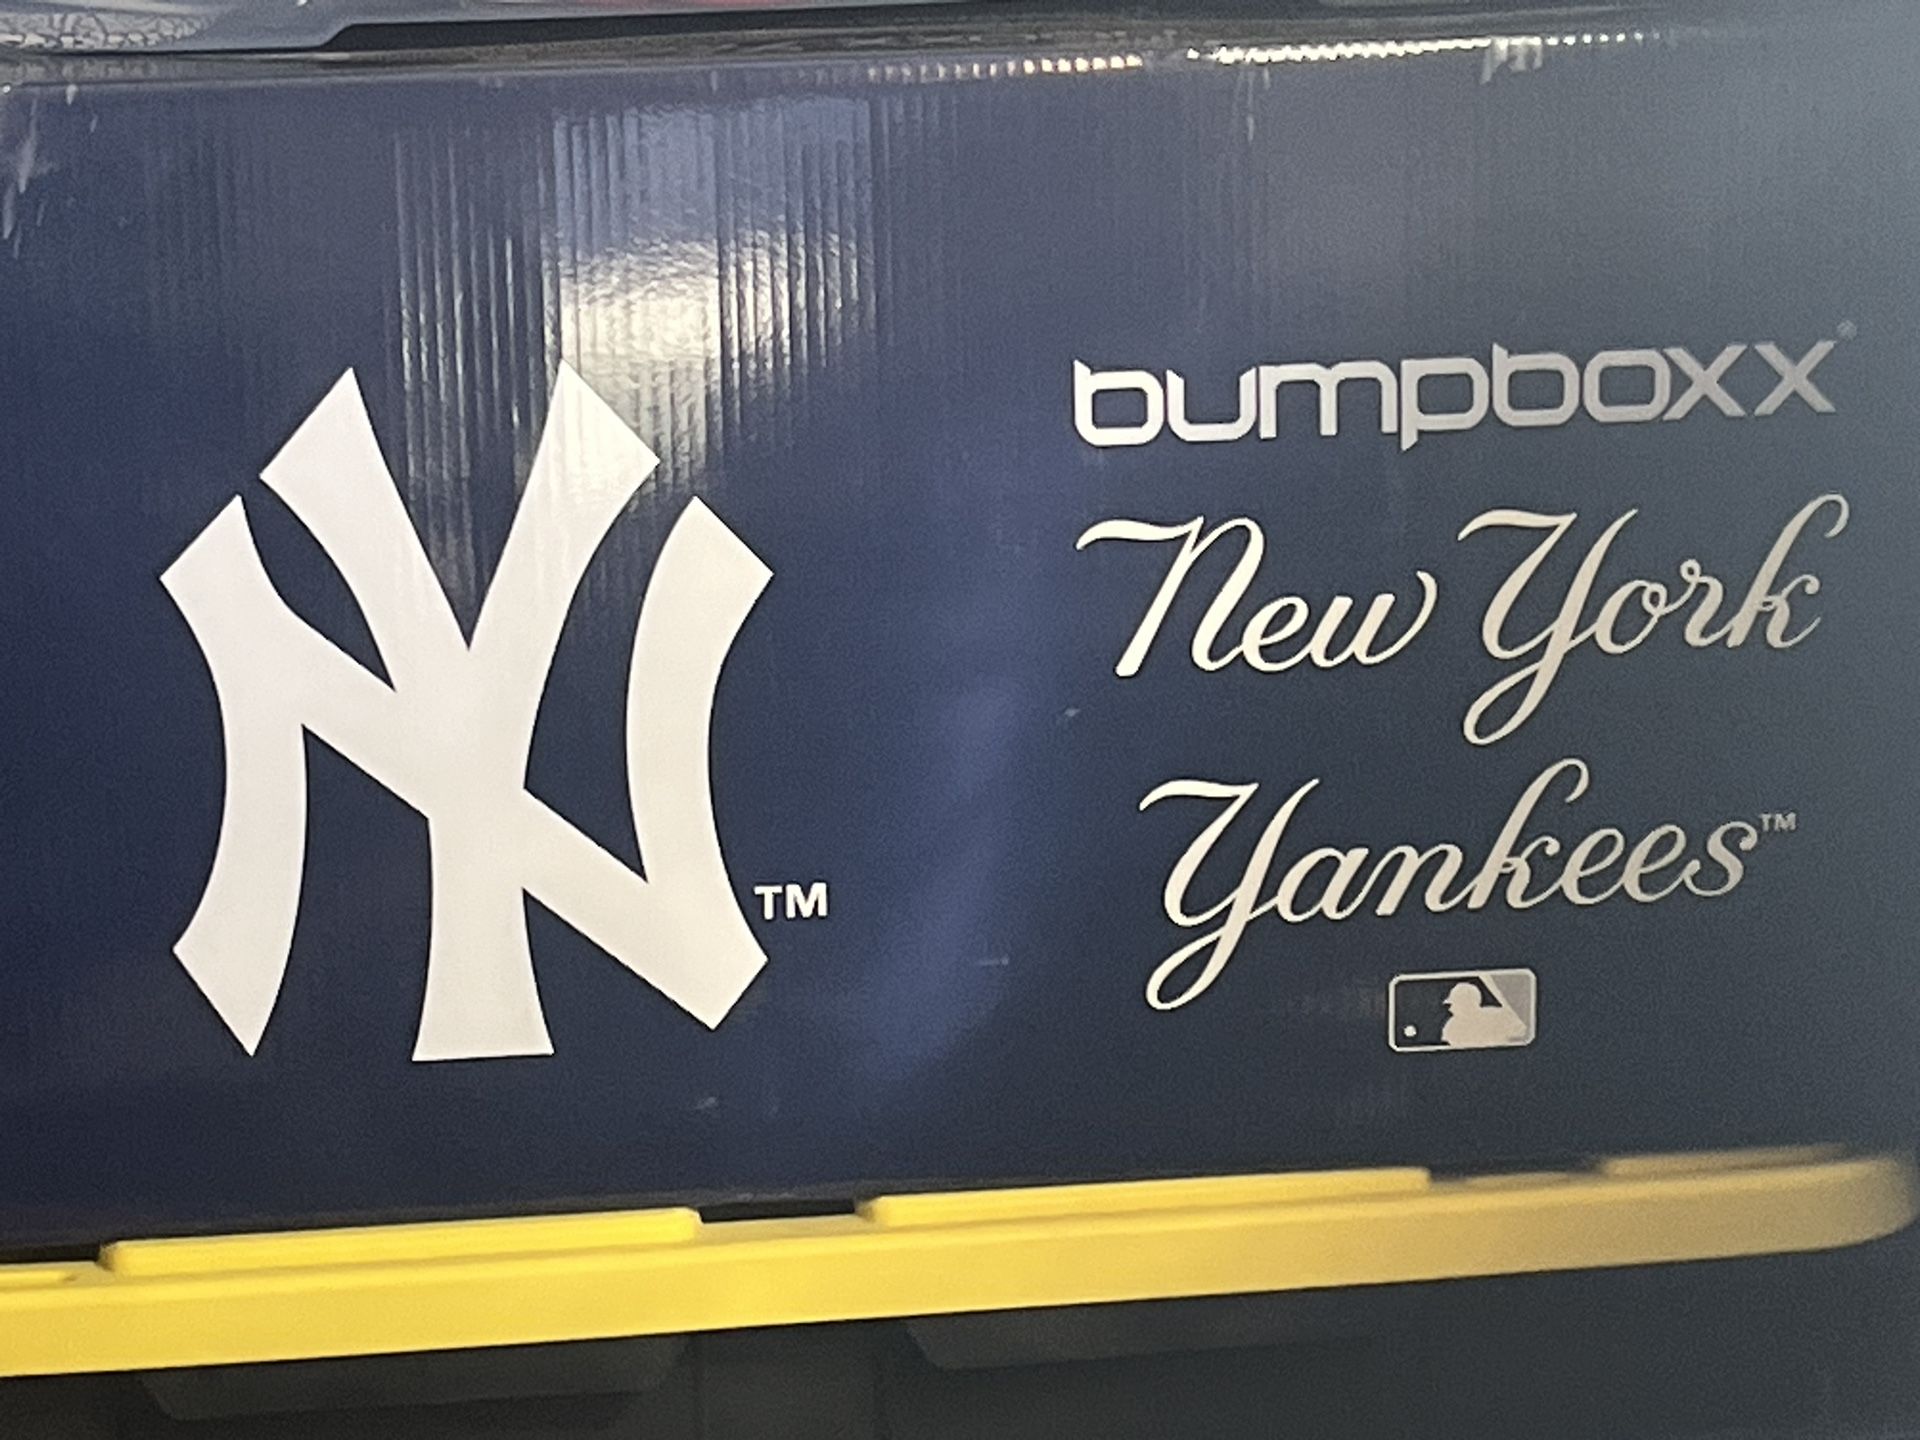 New York Yankees Bumpboxx 